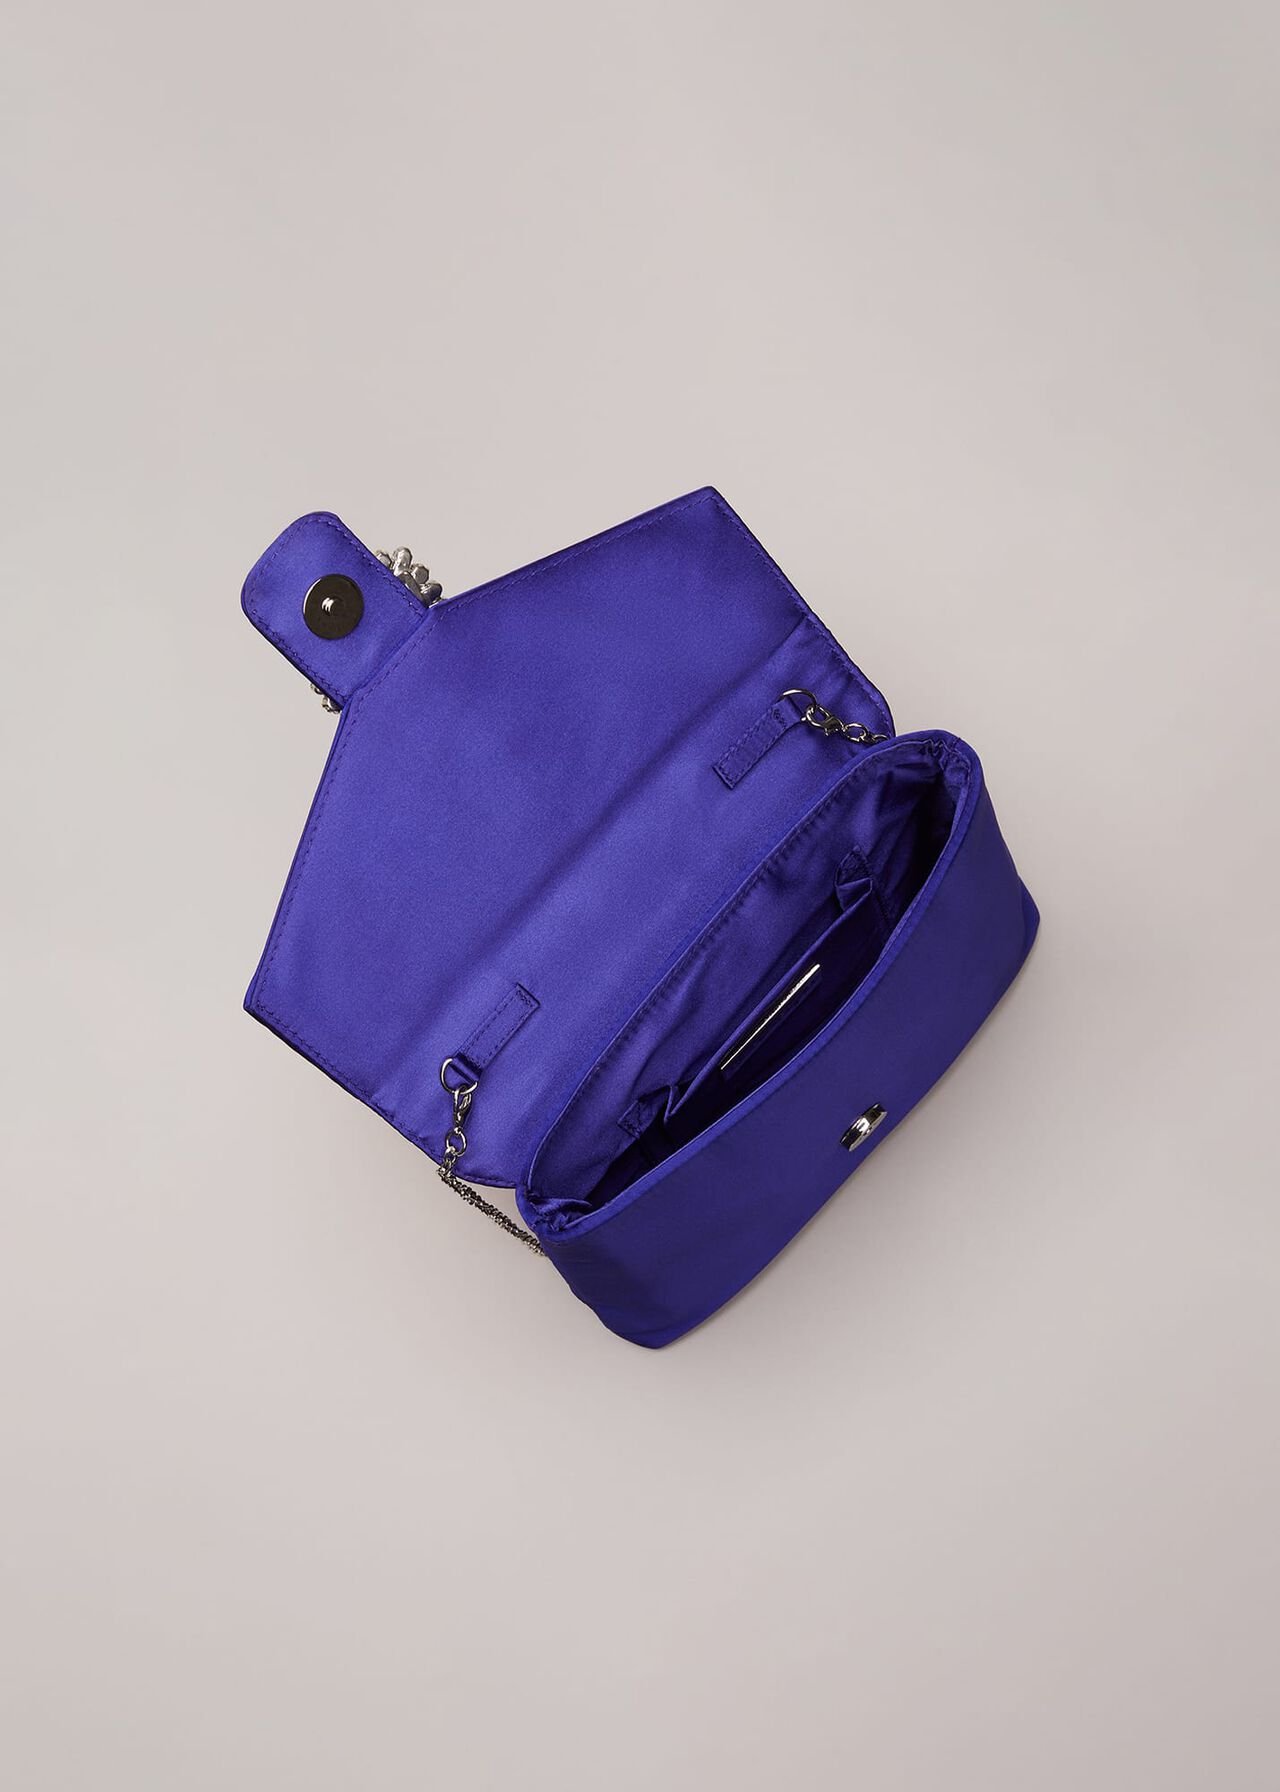 Blue Satin Clutch Bag